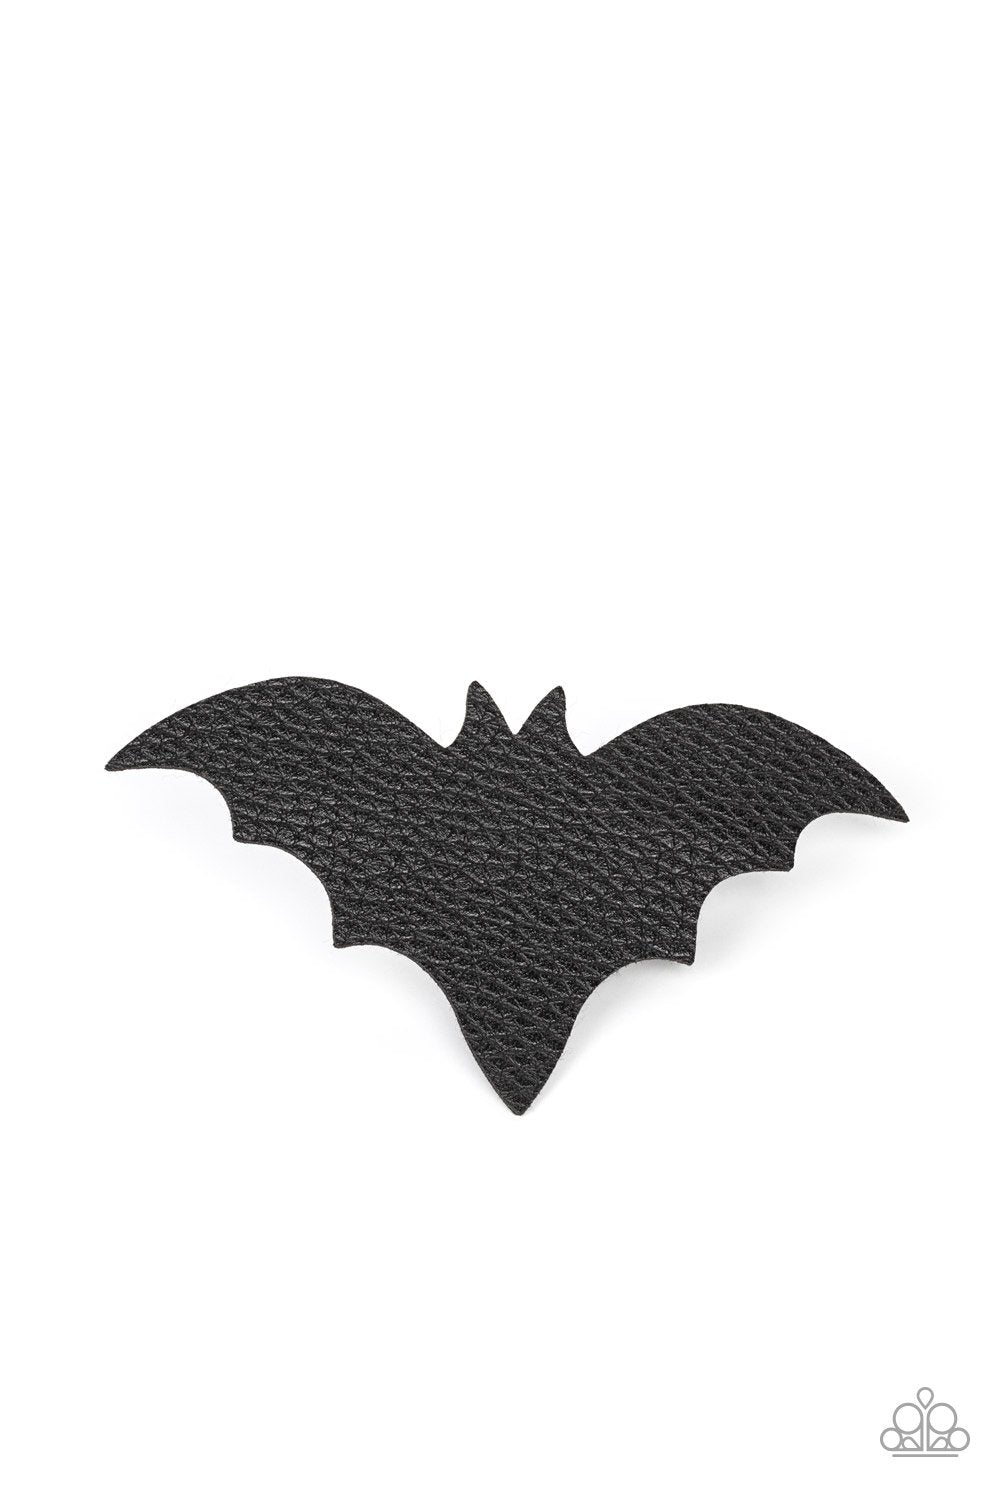 BAT to the Bone Black Leather Bat Hair Clip - Paparazzi Accessories- model - CarasShop.com - $5 Jewelry by Cara Jewels